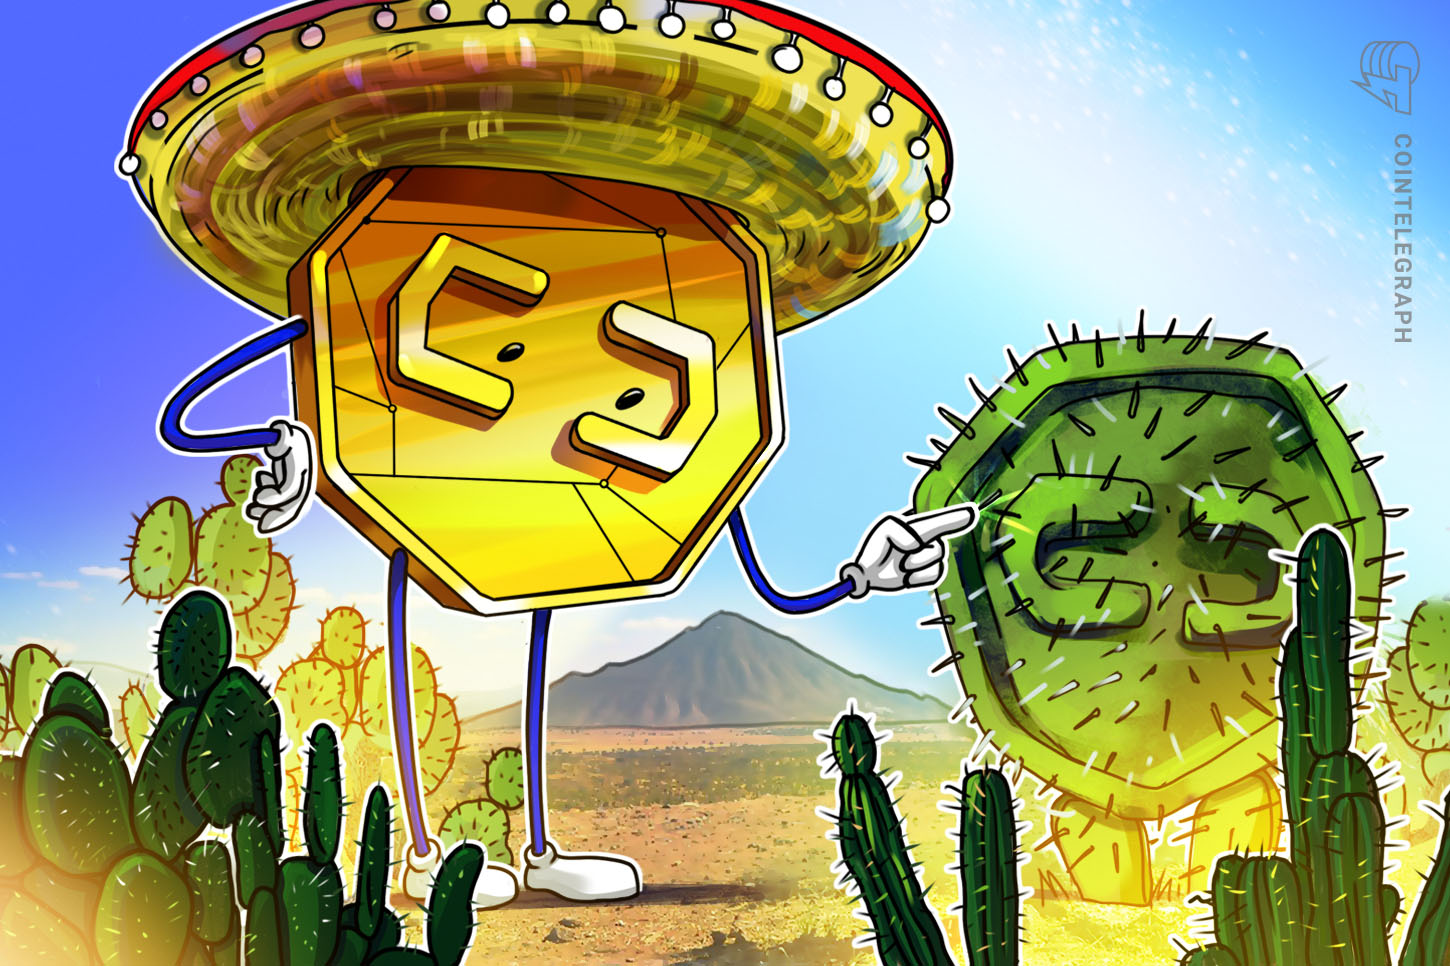 Mexico’s second-richest man invests 10% of his liquid portfolio in Bitcoin